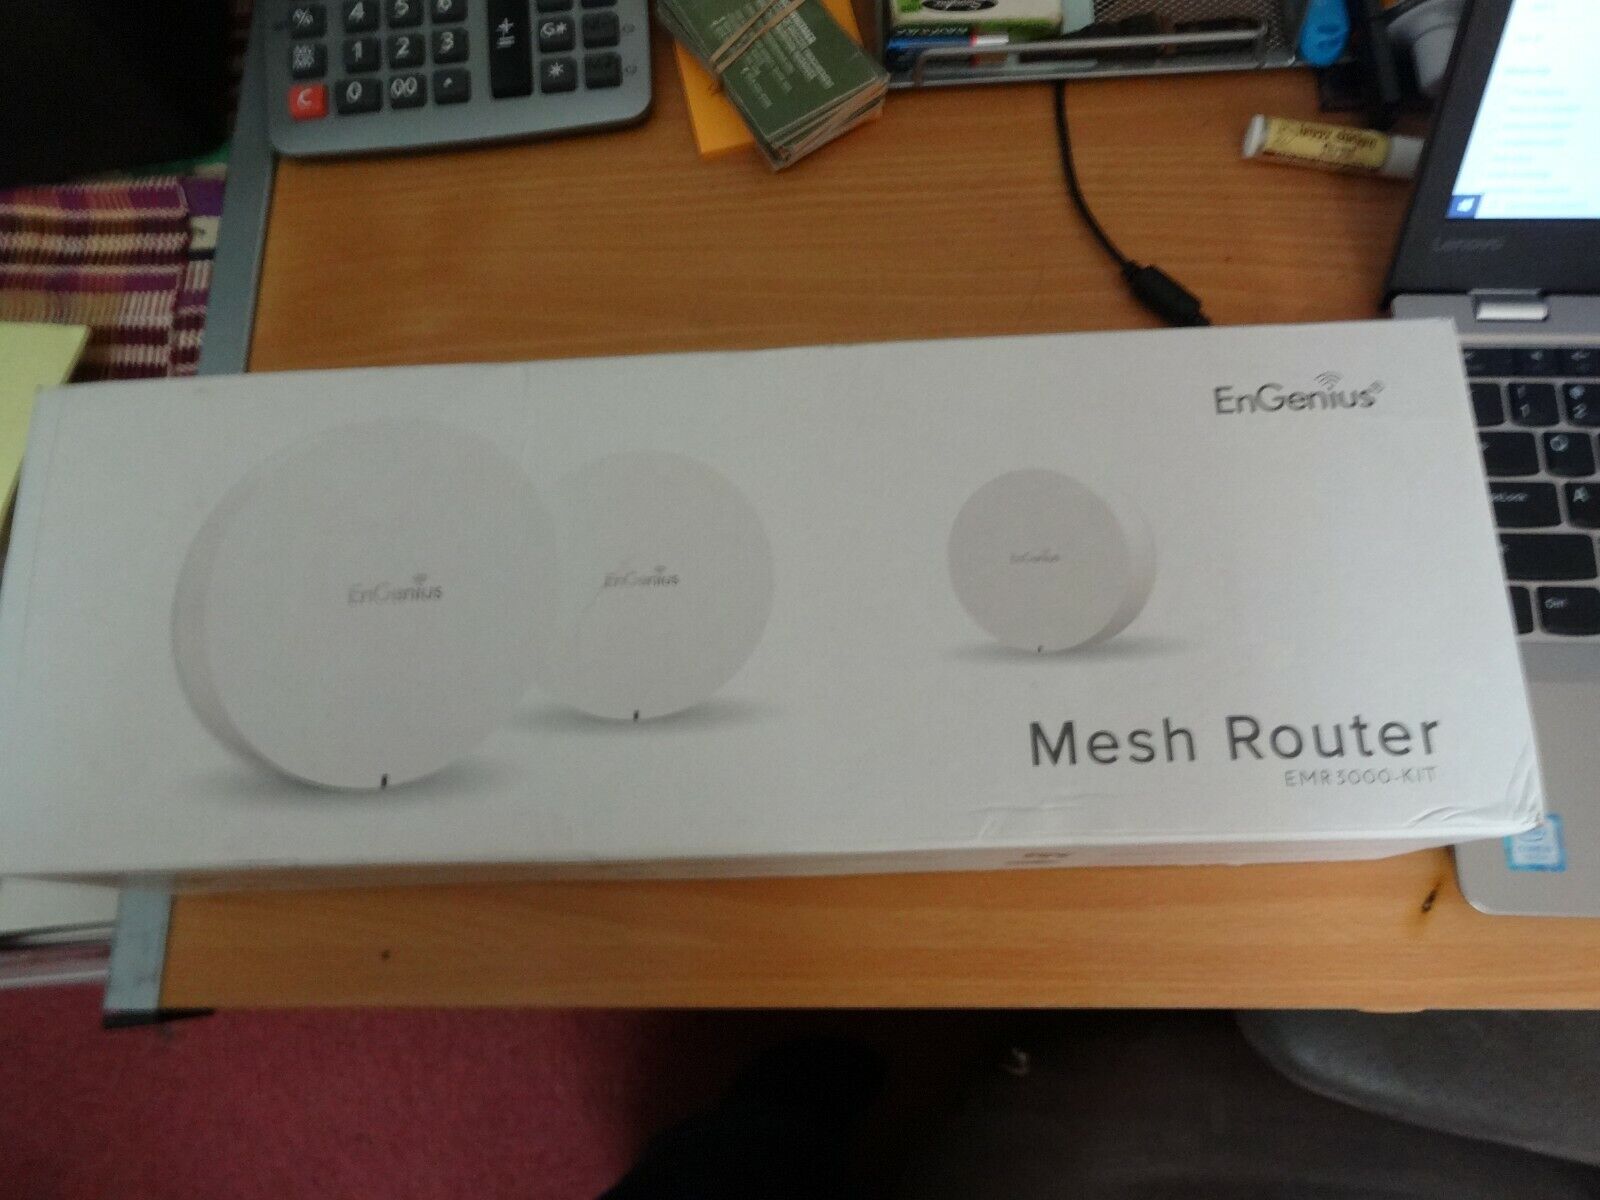 EnGenius Mesh Router EMR3000-Kit New In Original Box